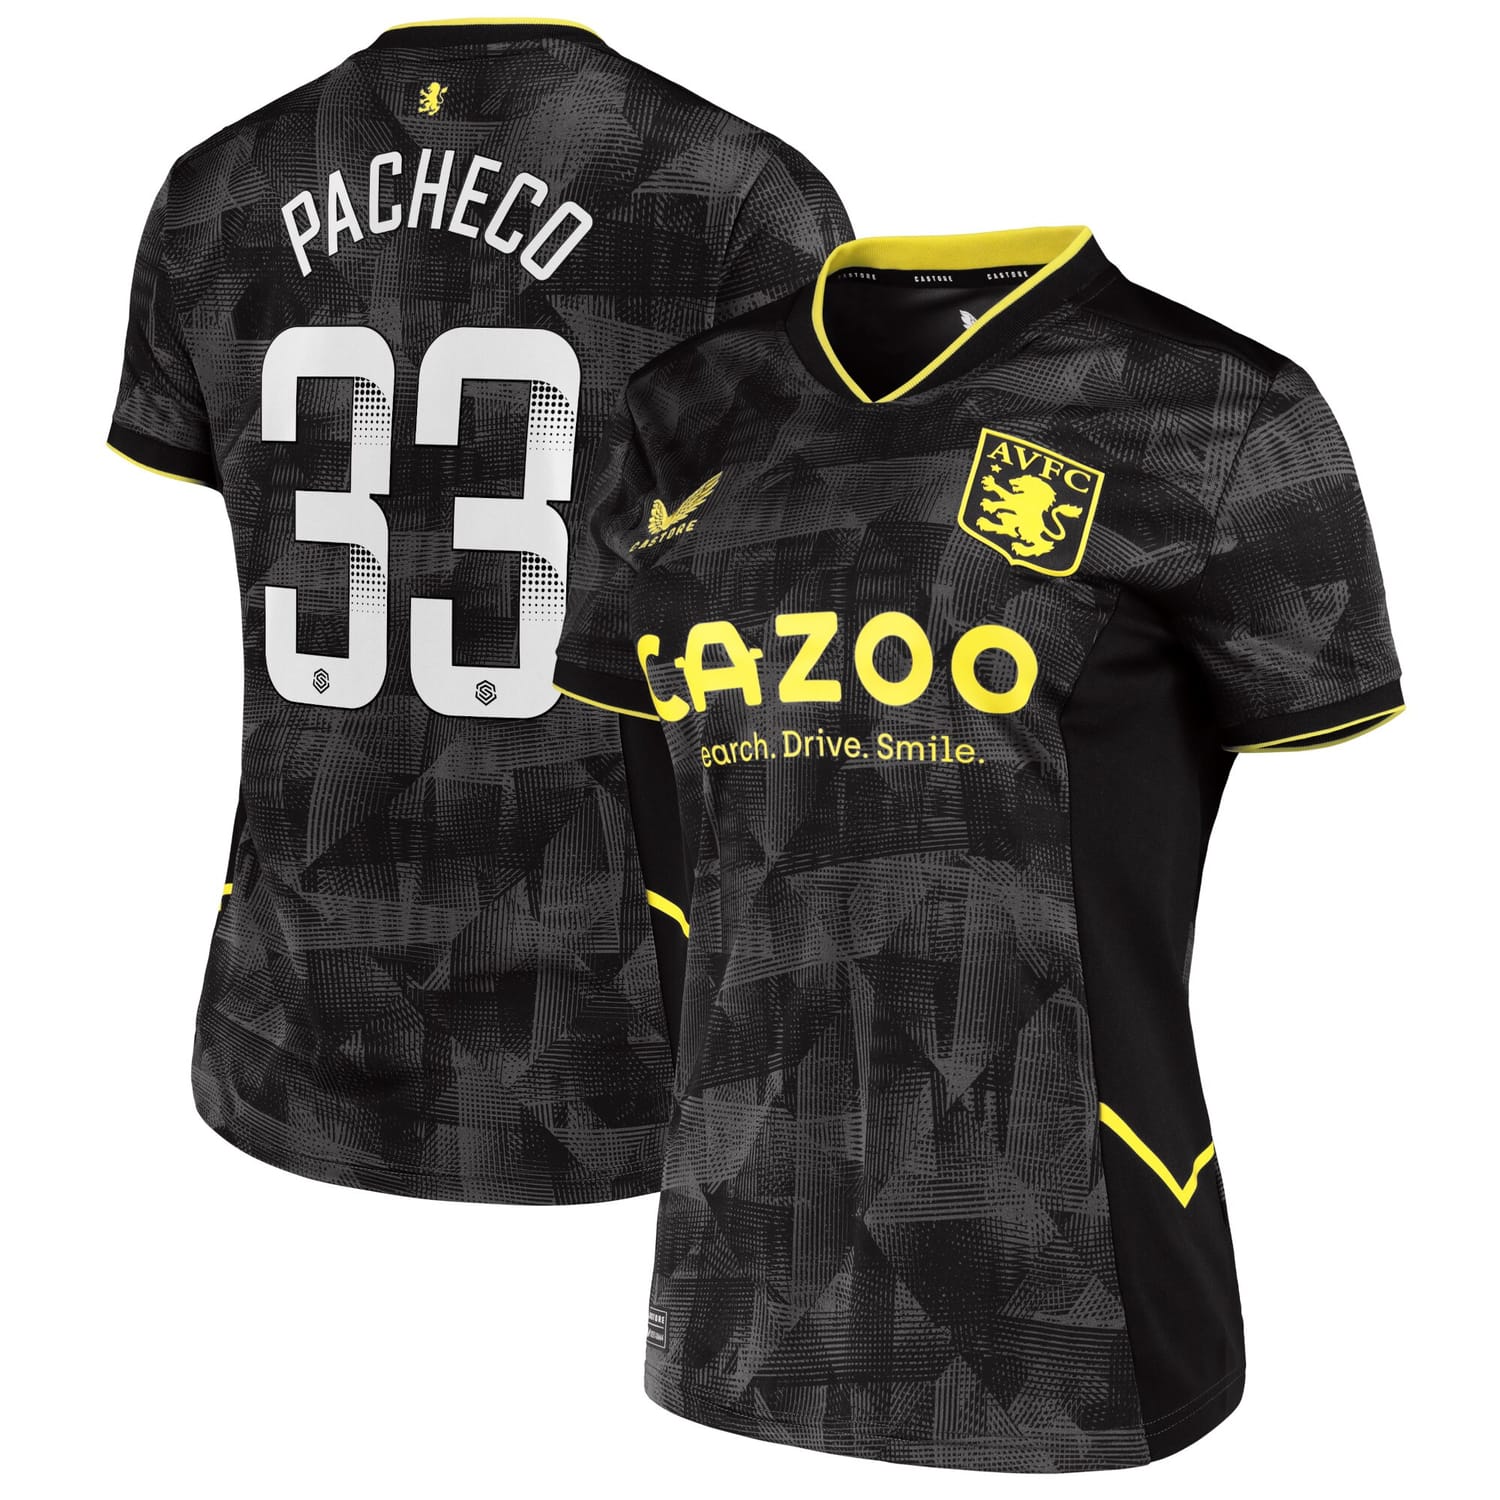 Premier League Aston Villa Third WSL Jersey Shirt 2022-23 player Mayumi Pacheco 33 printing for Women